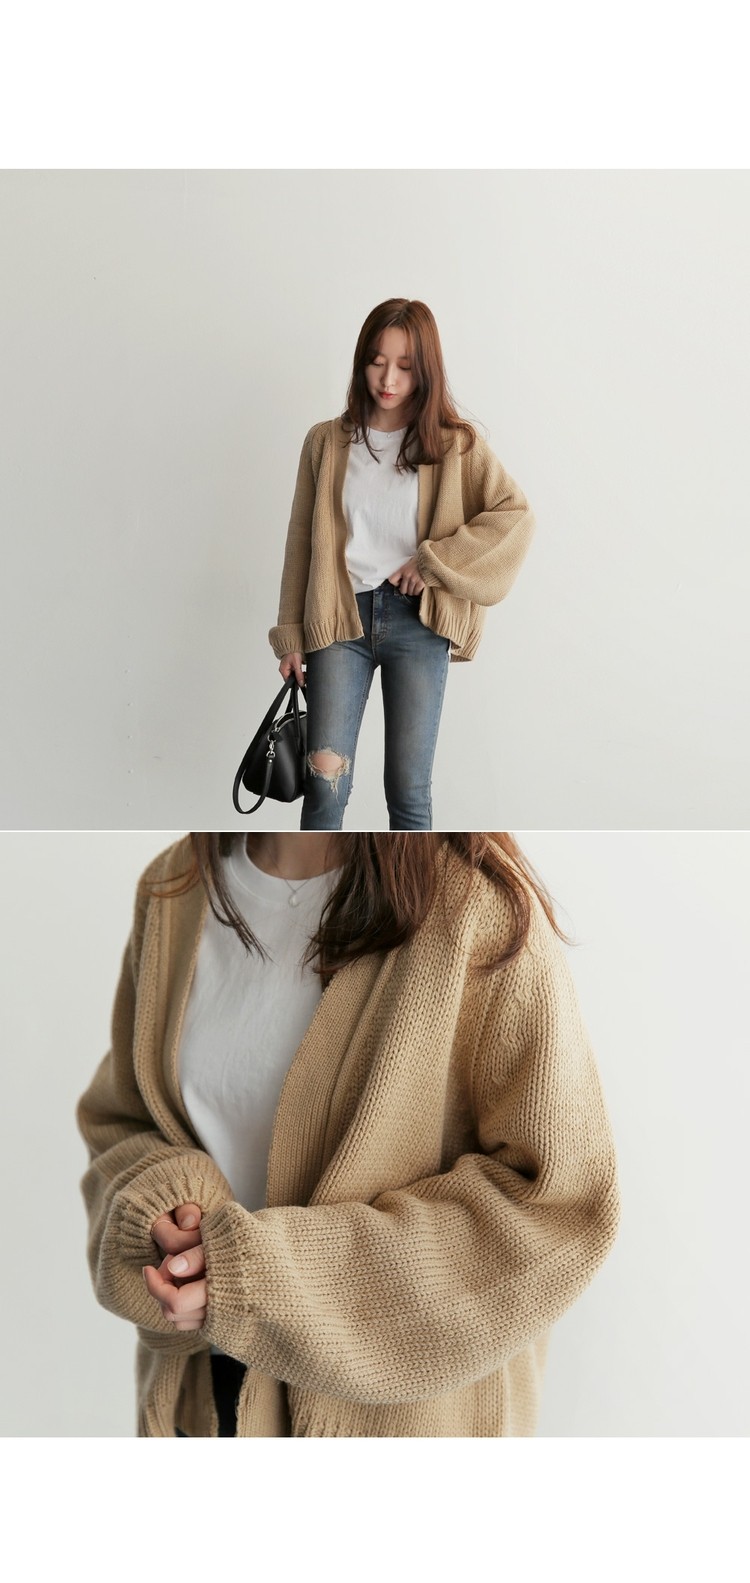 KHG0554X Sweater